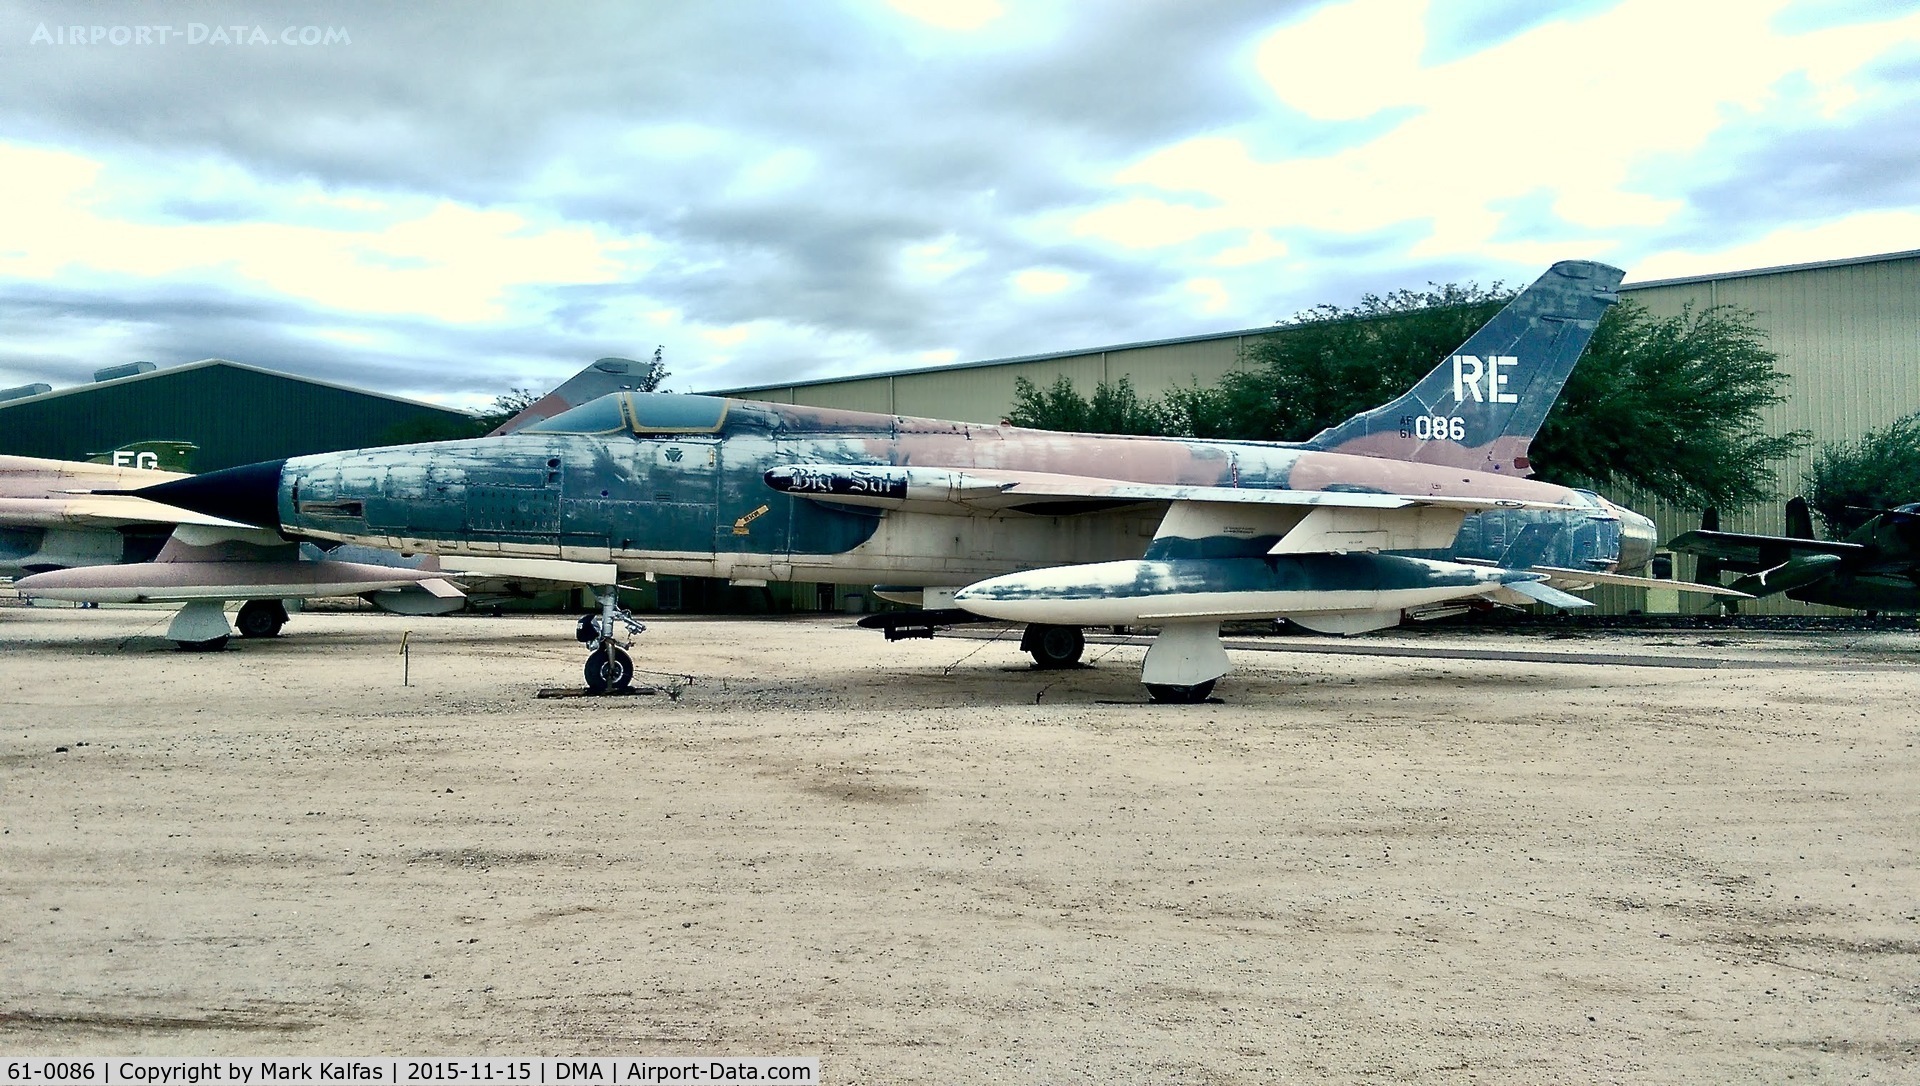 61-0086, 1961 Republic F-105D Thunderchief C/N D281, Republic F-105D Thunderchief, 61-0086 at 
Pima